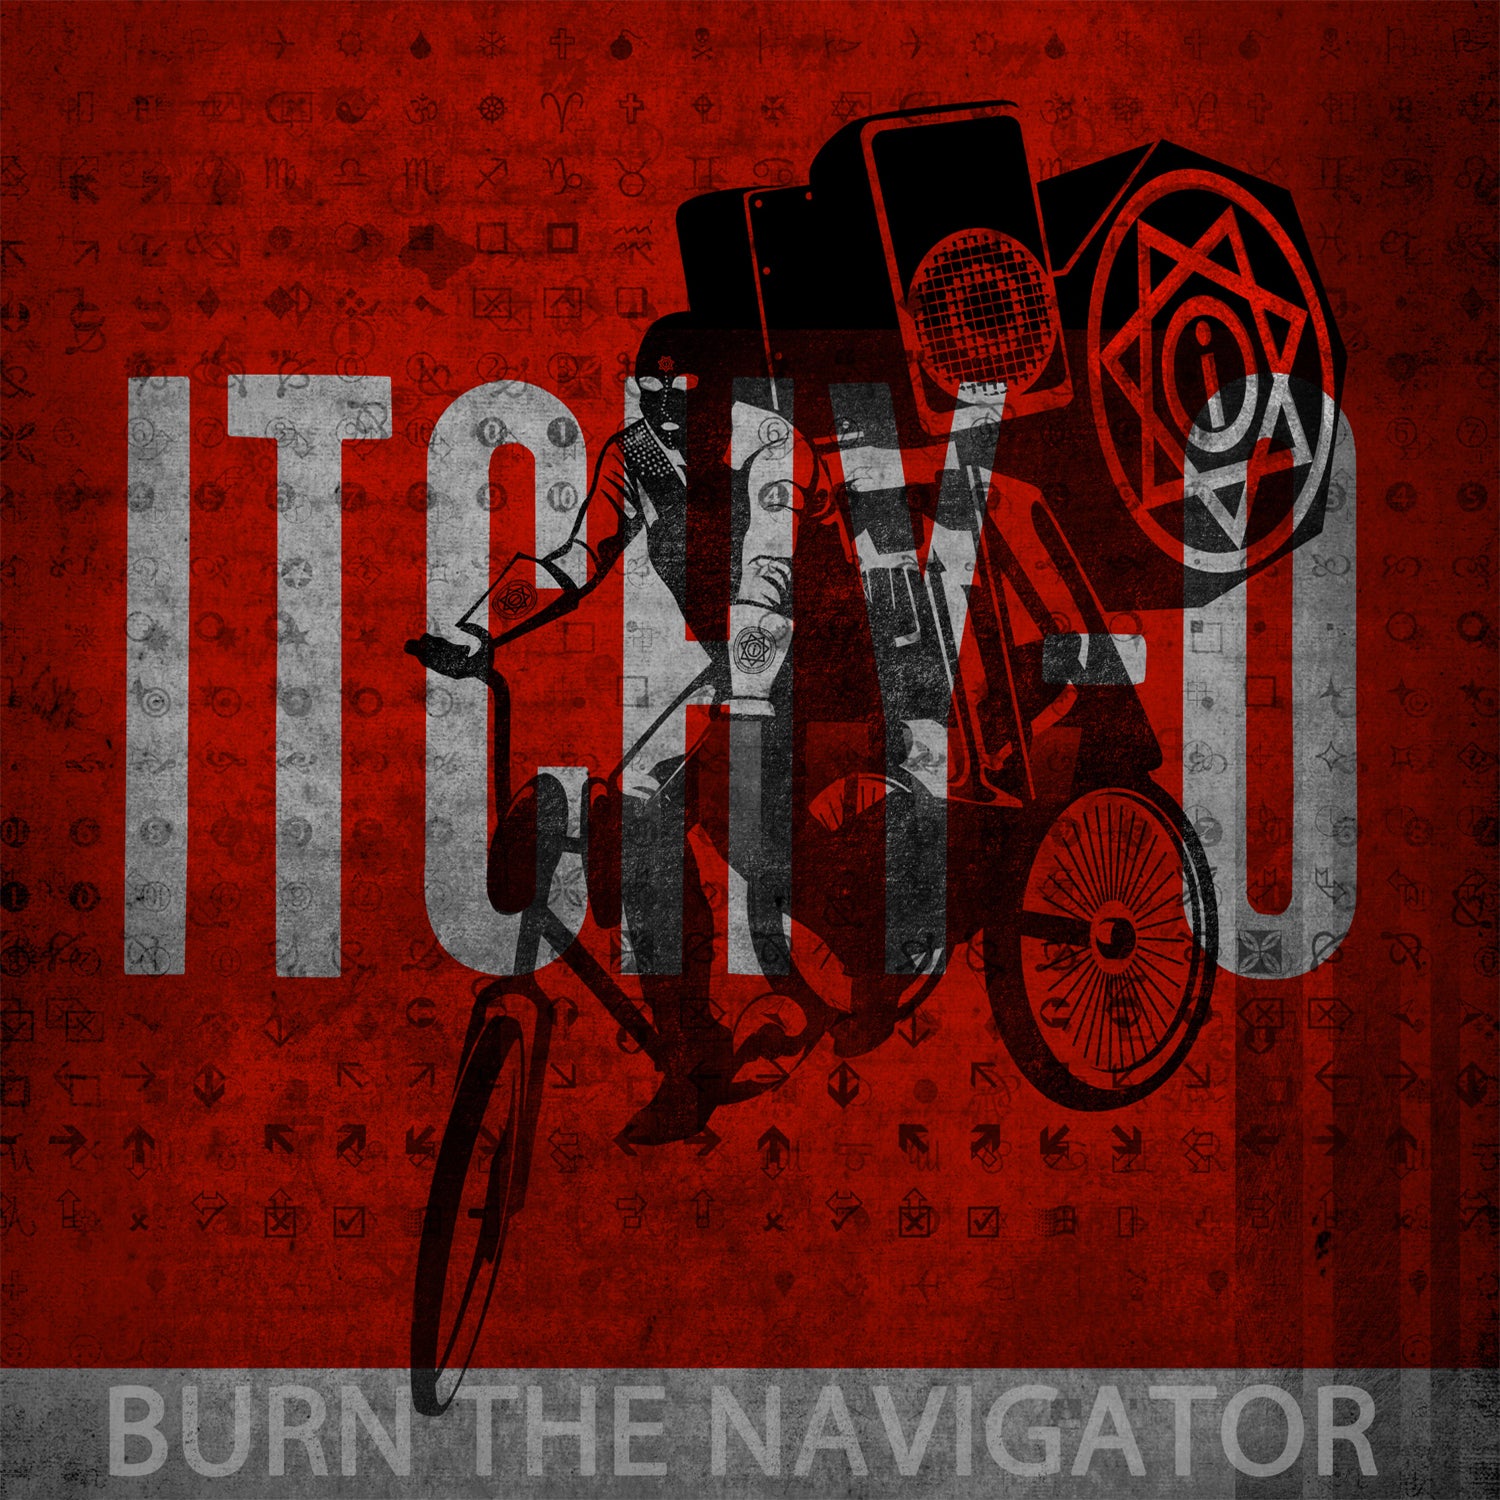 v467 - Itchy-O - "Burn The Navigator"